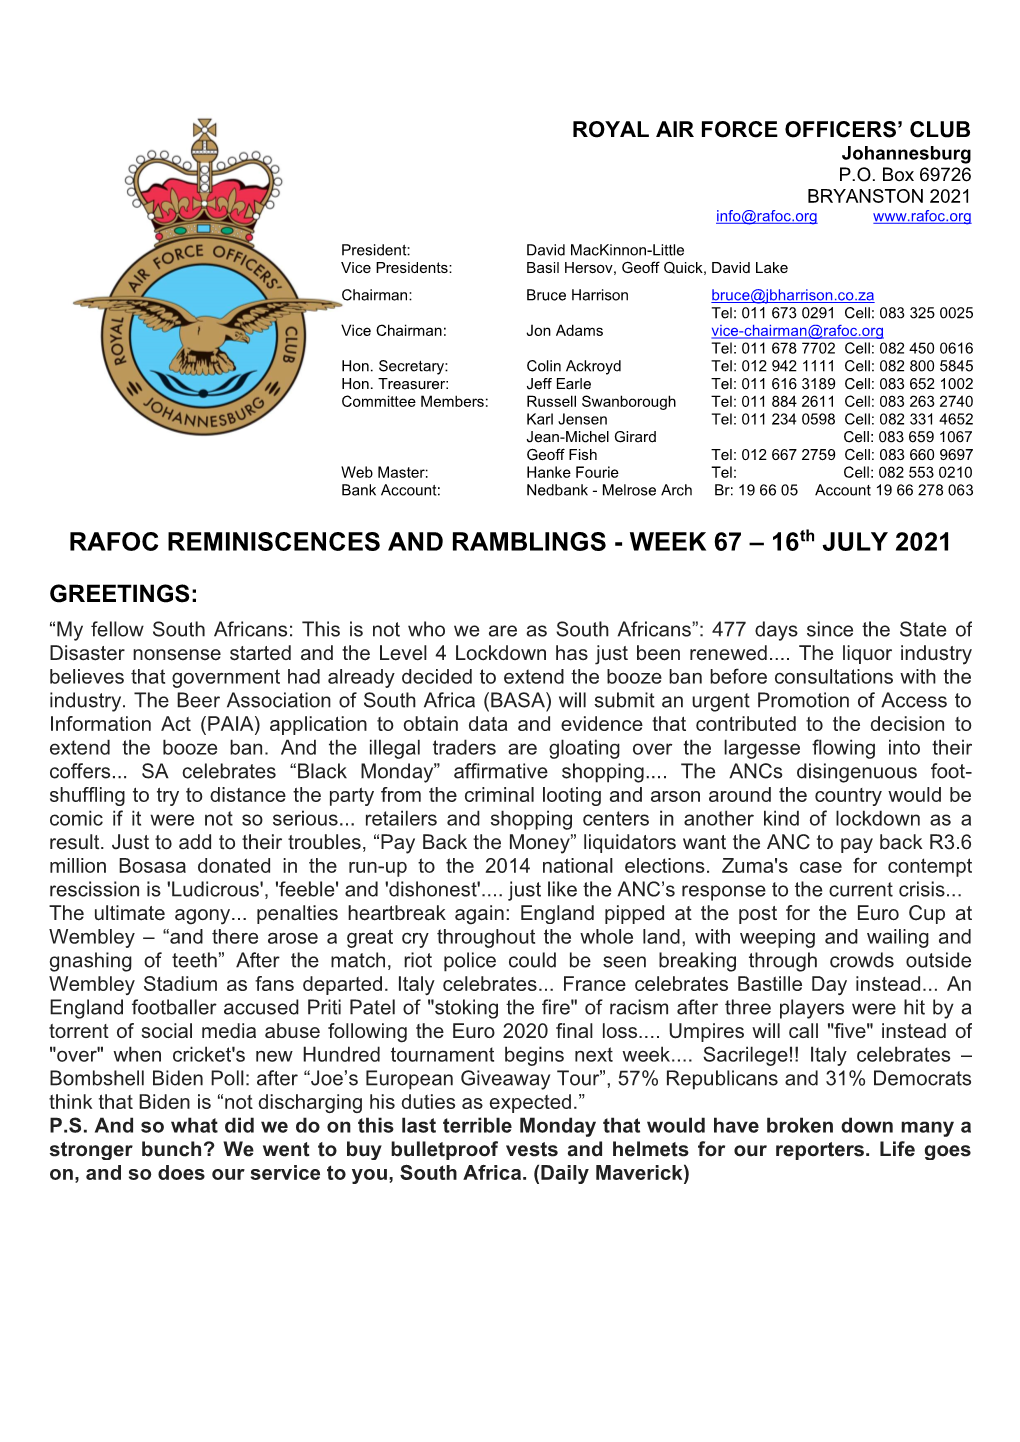 RAFOC REMINISCENCES and RAMBLINGS - WEEK 67 – 16Th JULY 2021